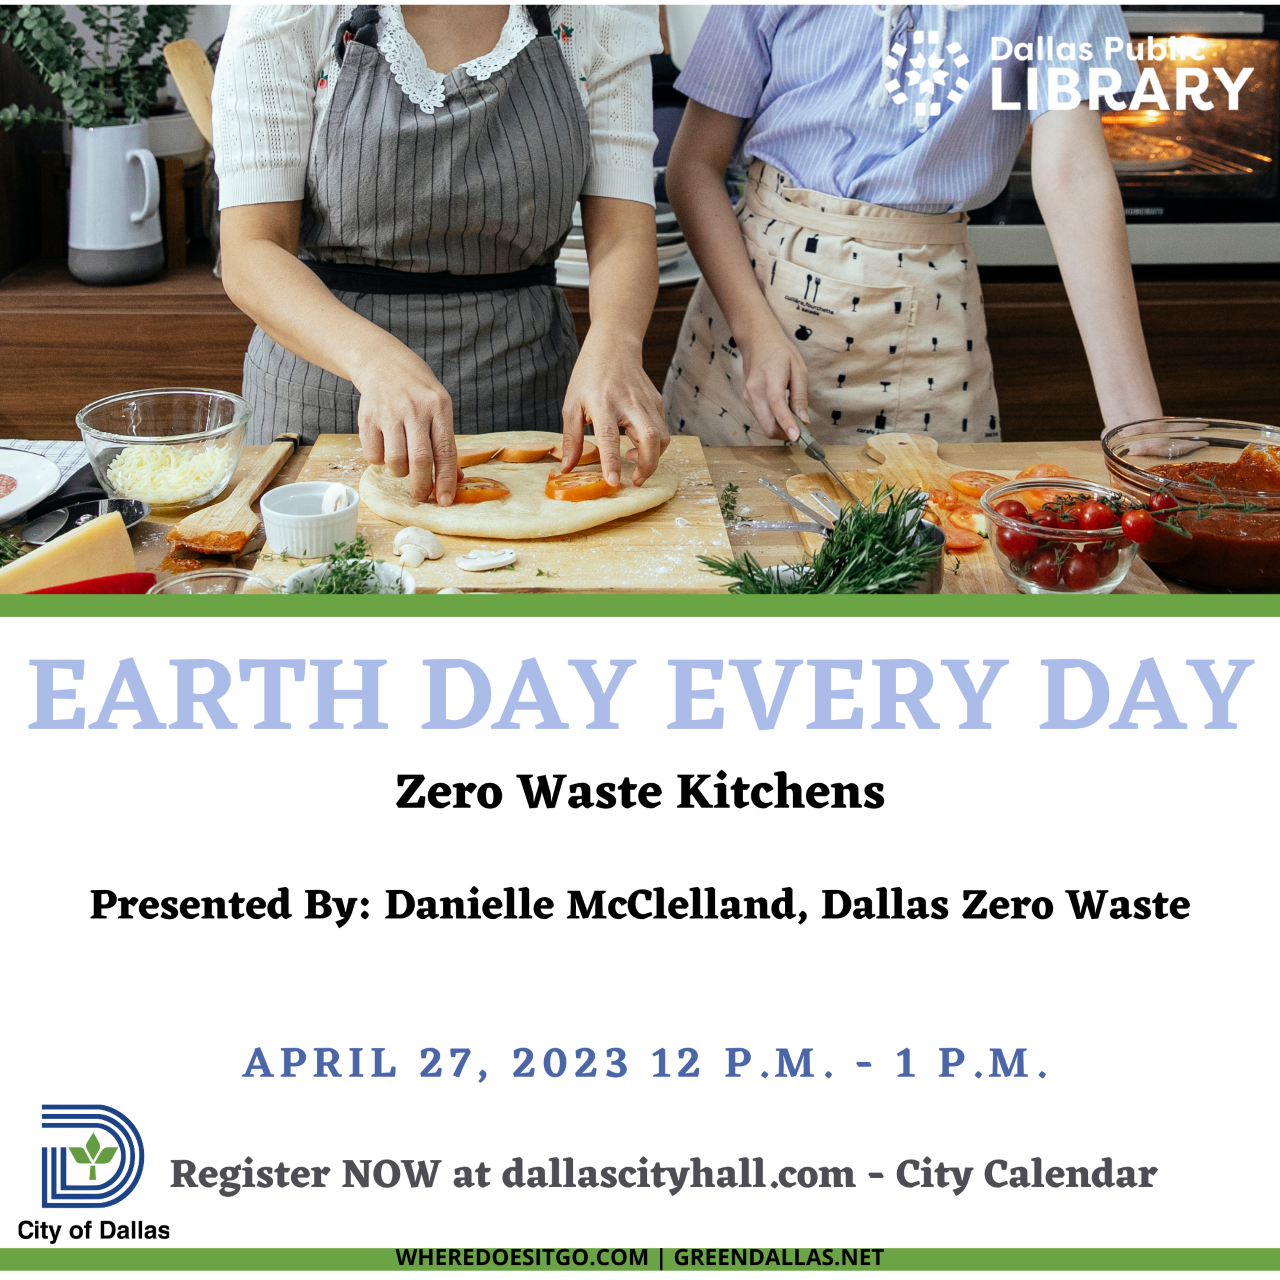 Earth Day Every Day! Zero Waste Kitchen Presented by Dallas Zero Waste